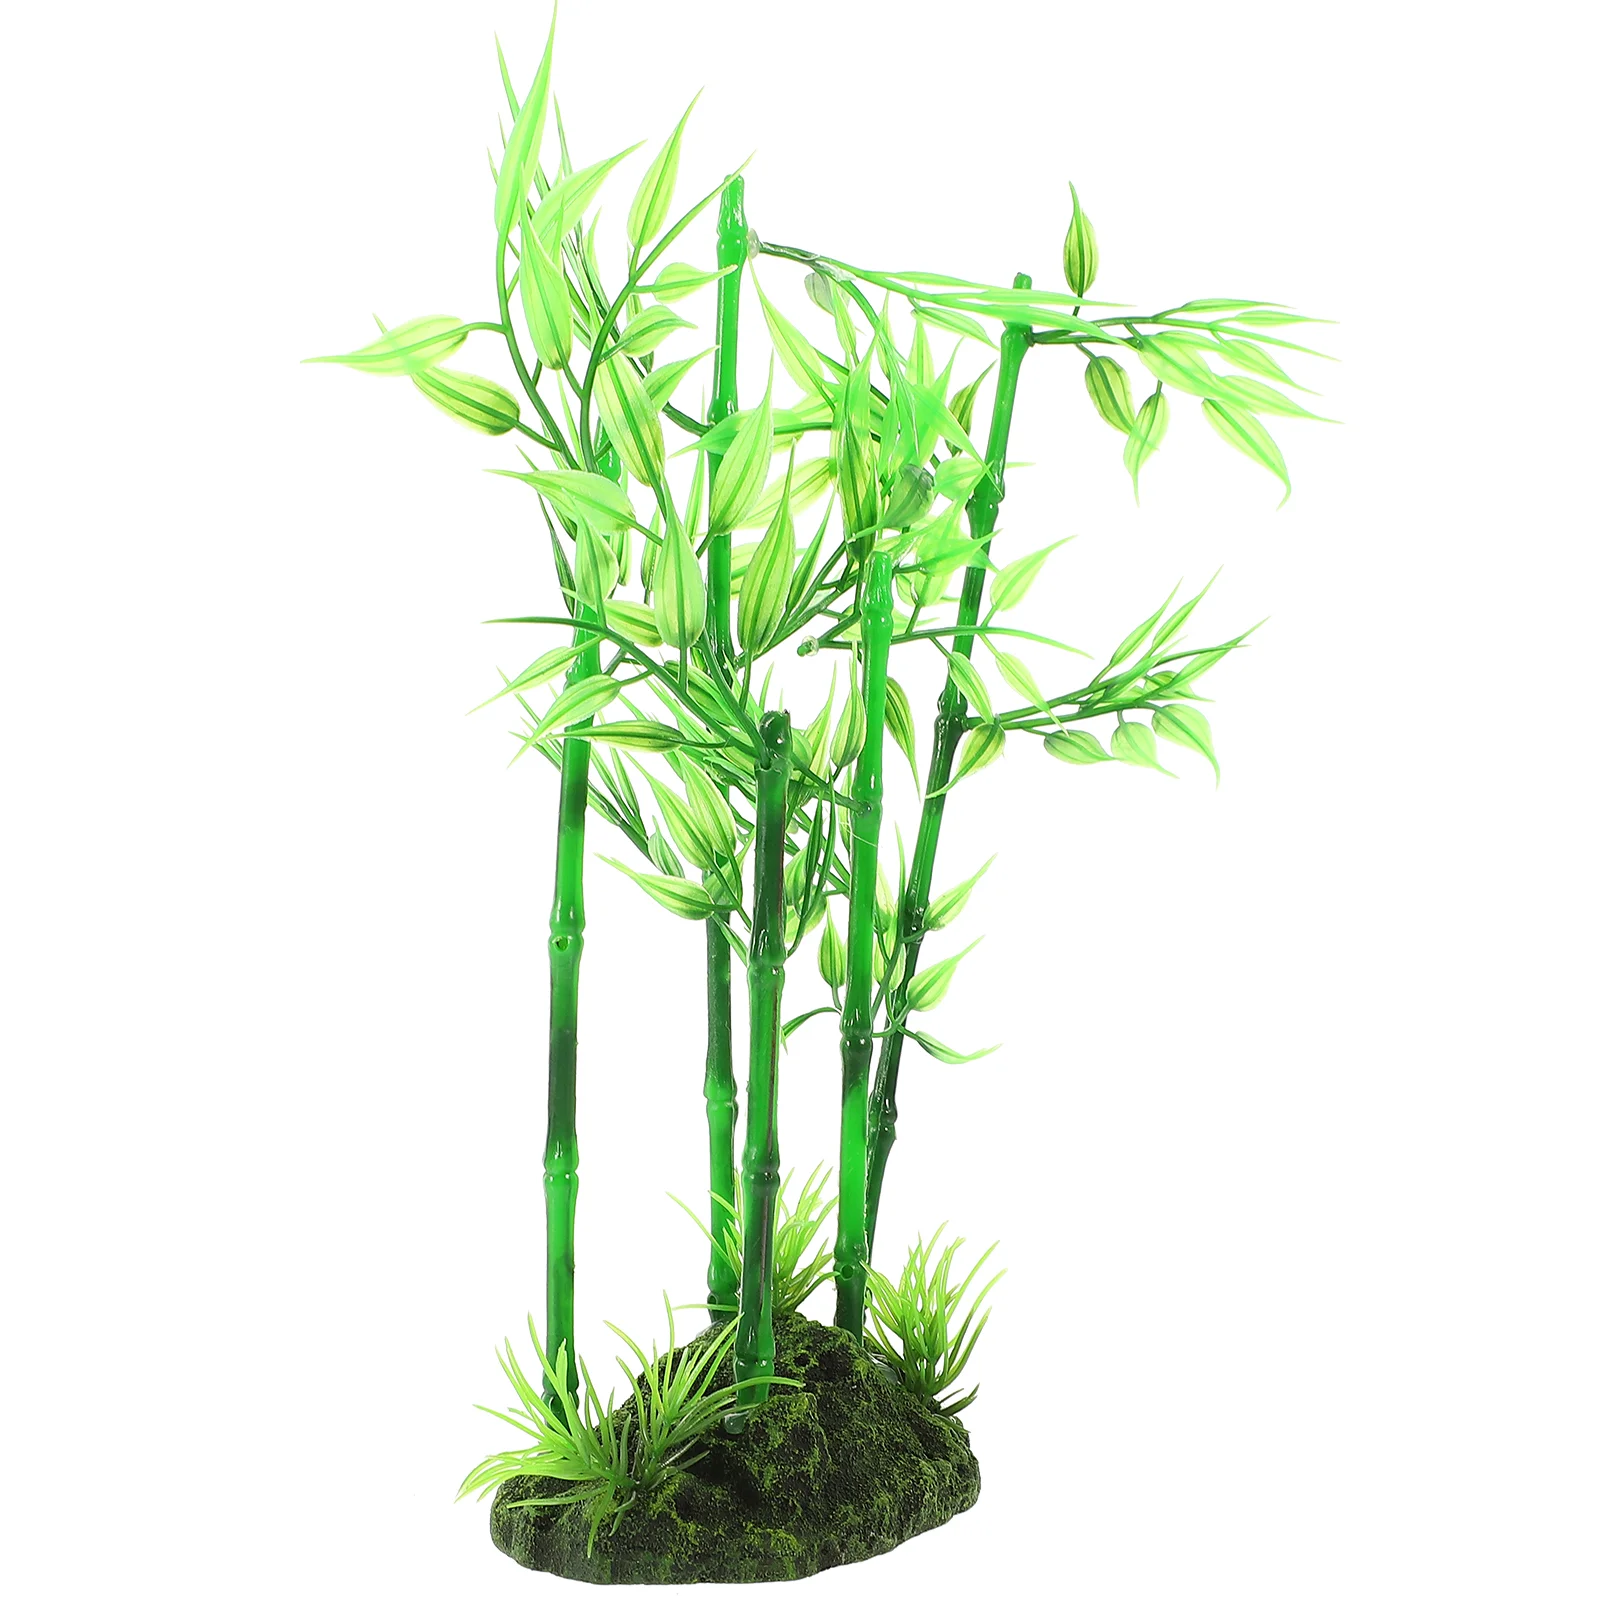 

Aquarium Plant Fish Tank Decoration Plastic Simulated Betta Resting Landscaping (leaf Grass) Bamboo Plants Models